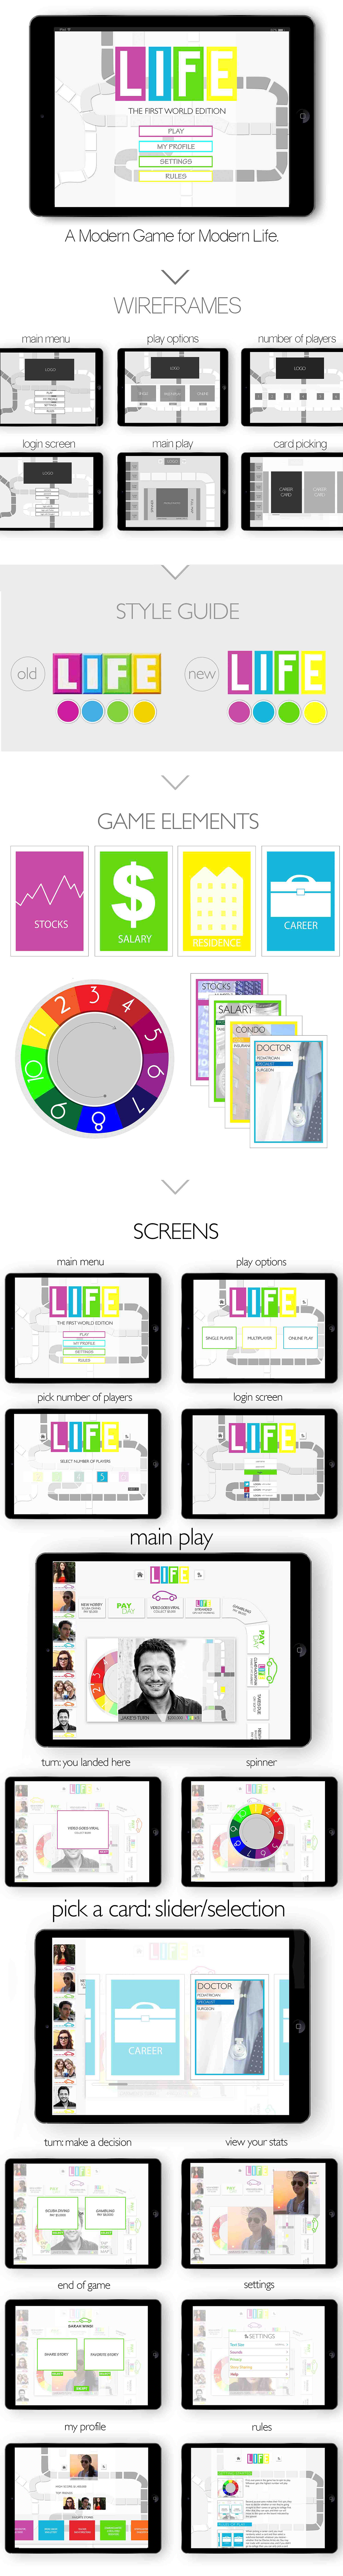 game of life interface design redesign modern flat ui